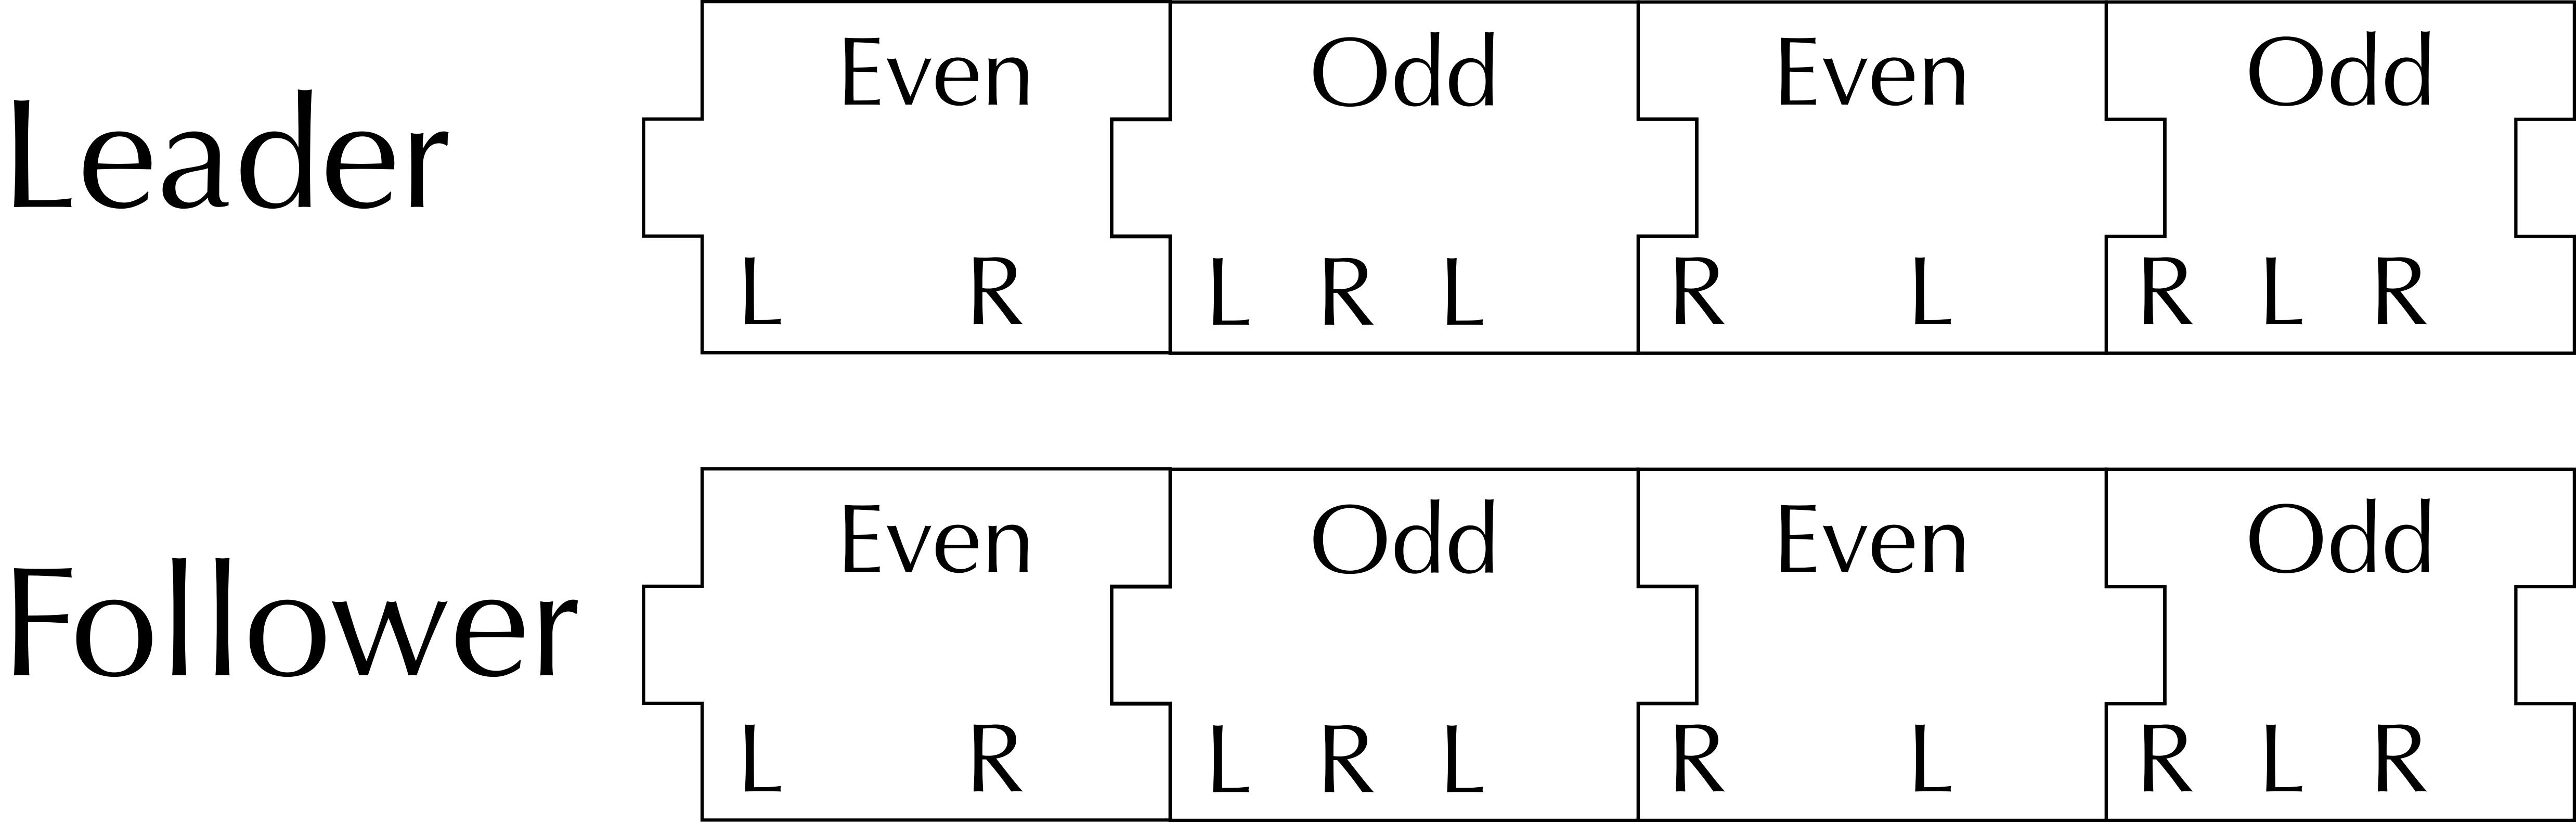 Graphical representation of charleston rhythm